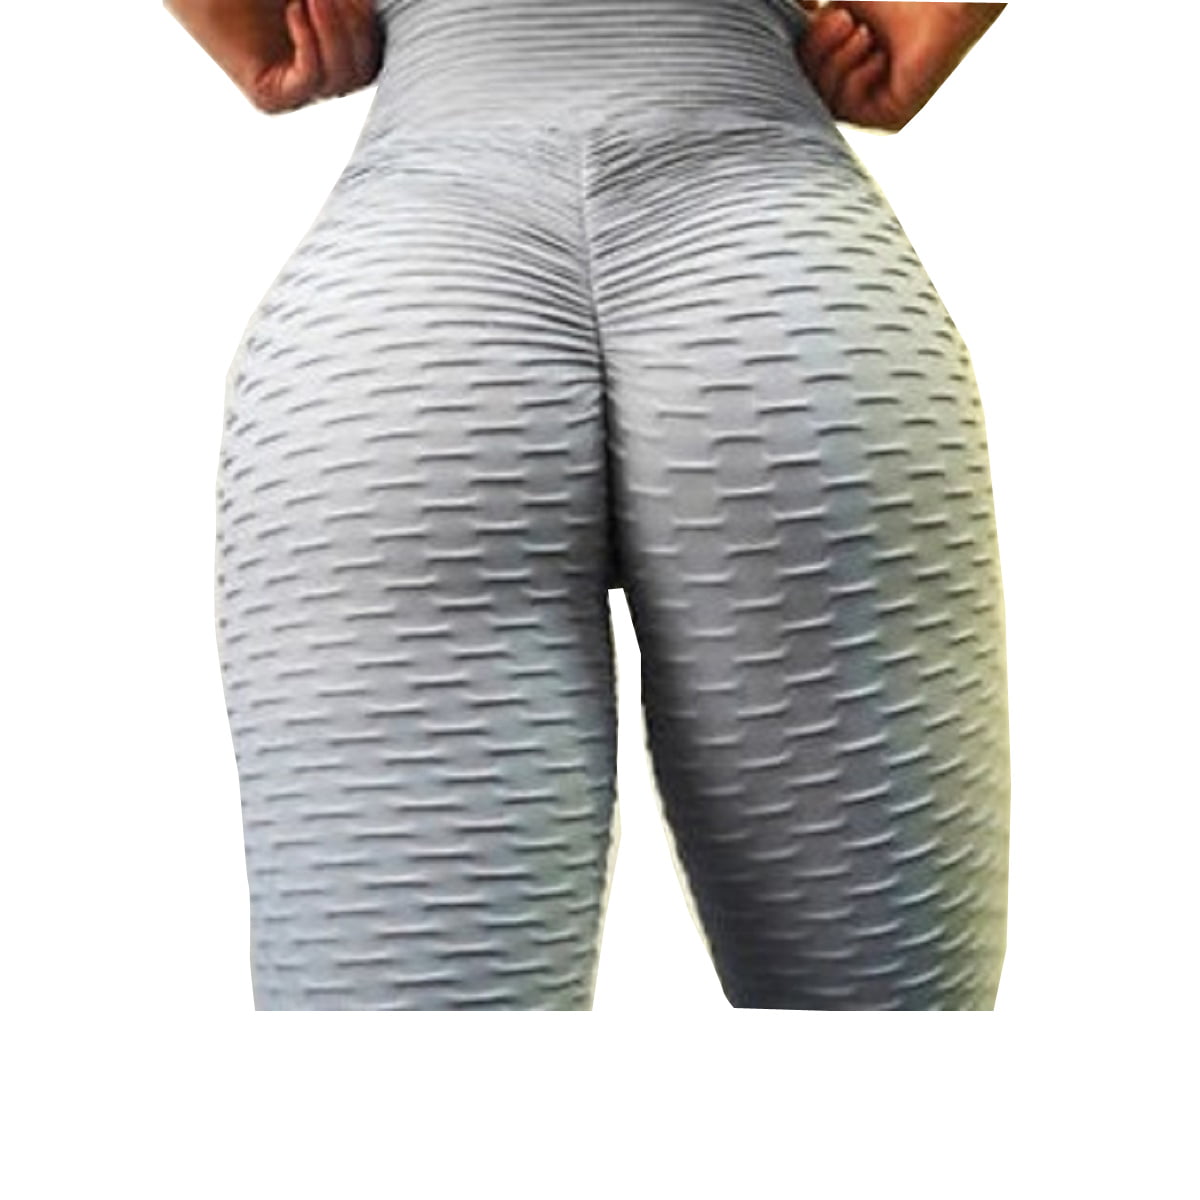 Elastic Women Yoga Gym Anti Cellulite Sport Leggings Butt Lift Pants Trousers US 